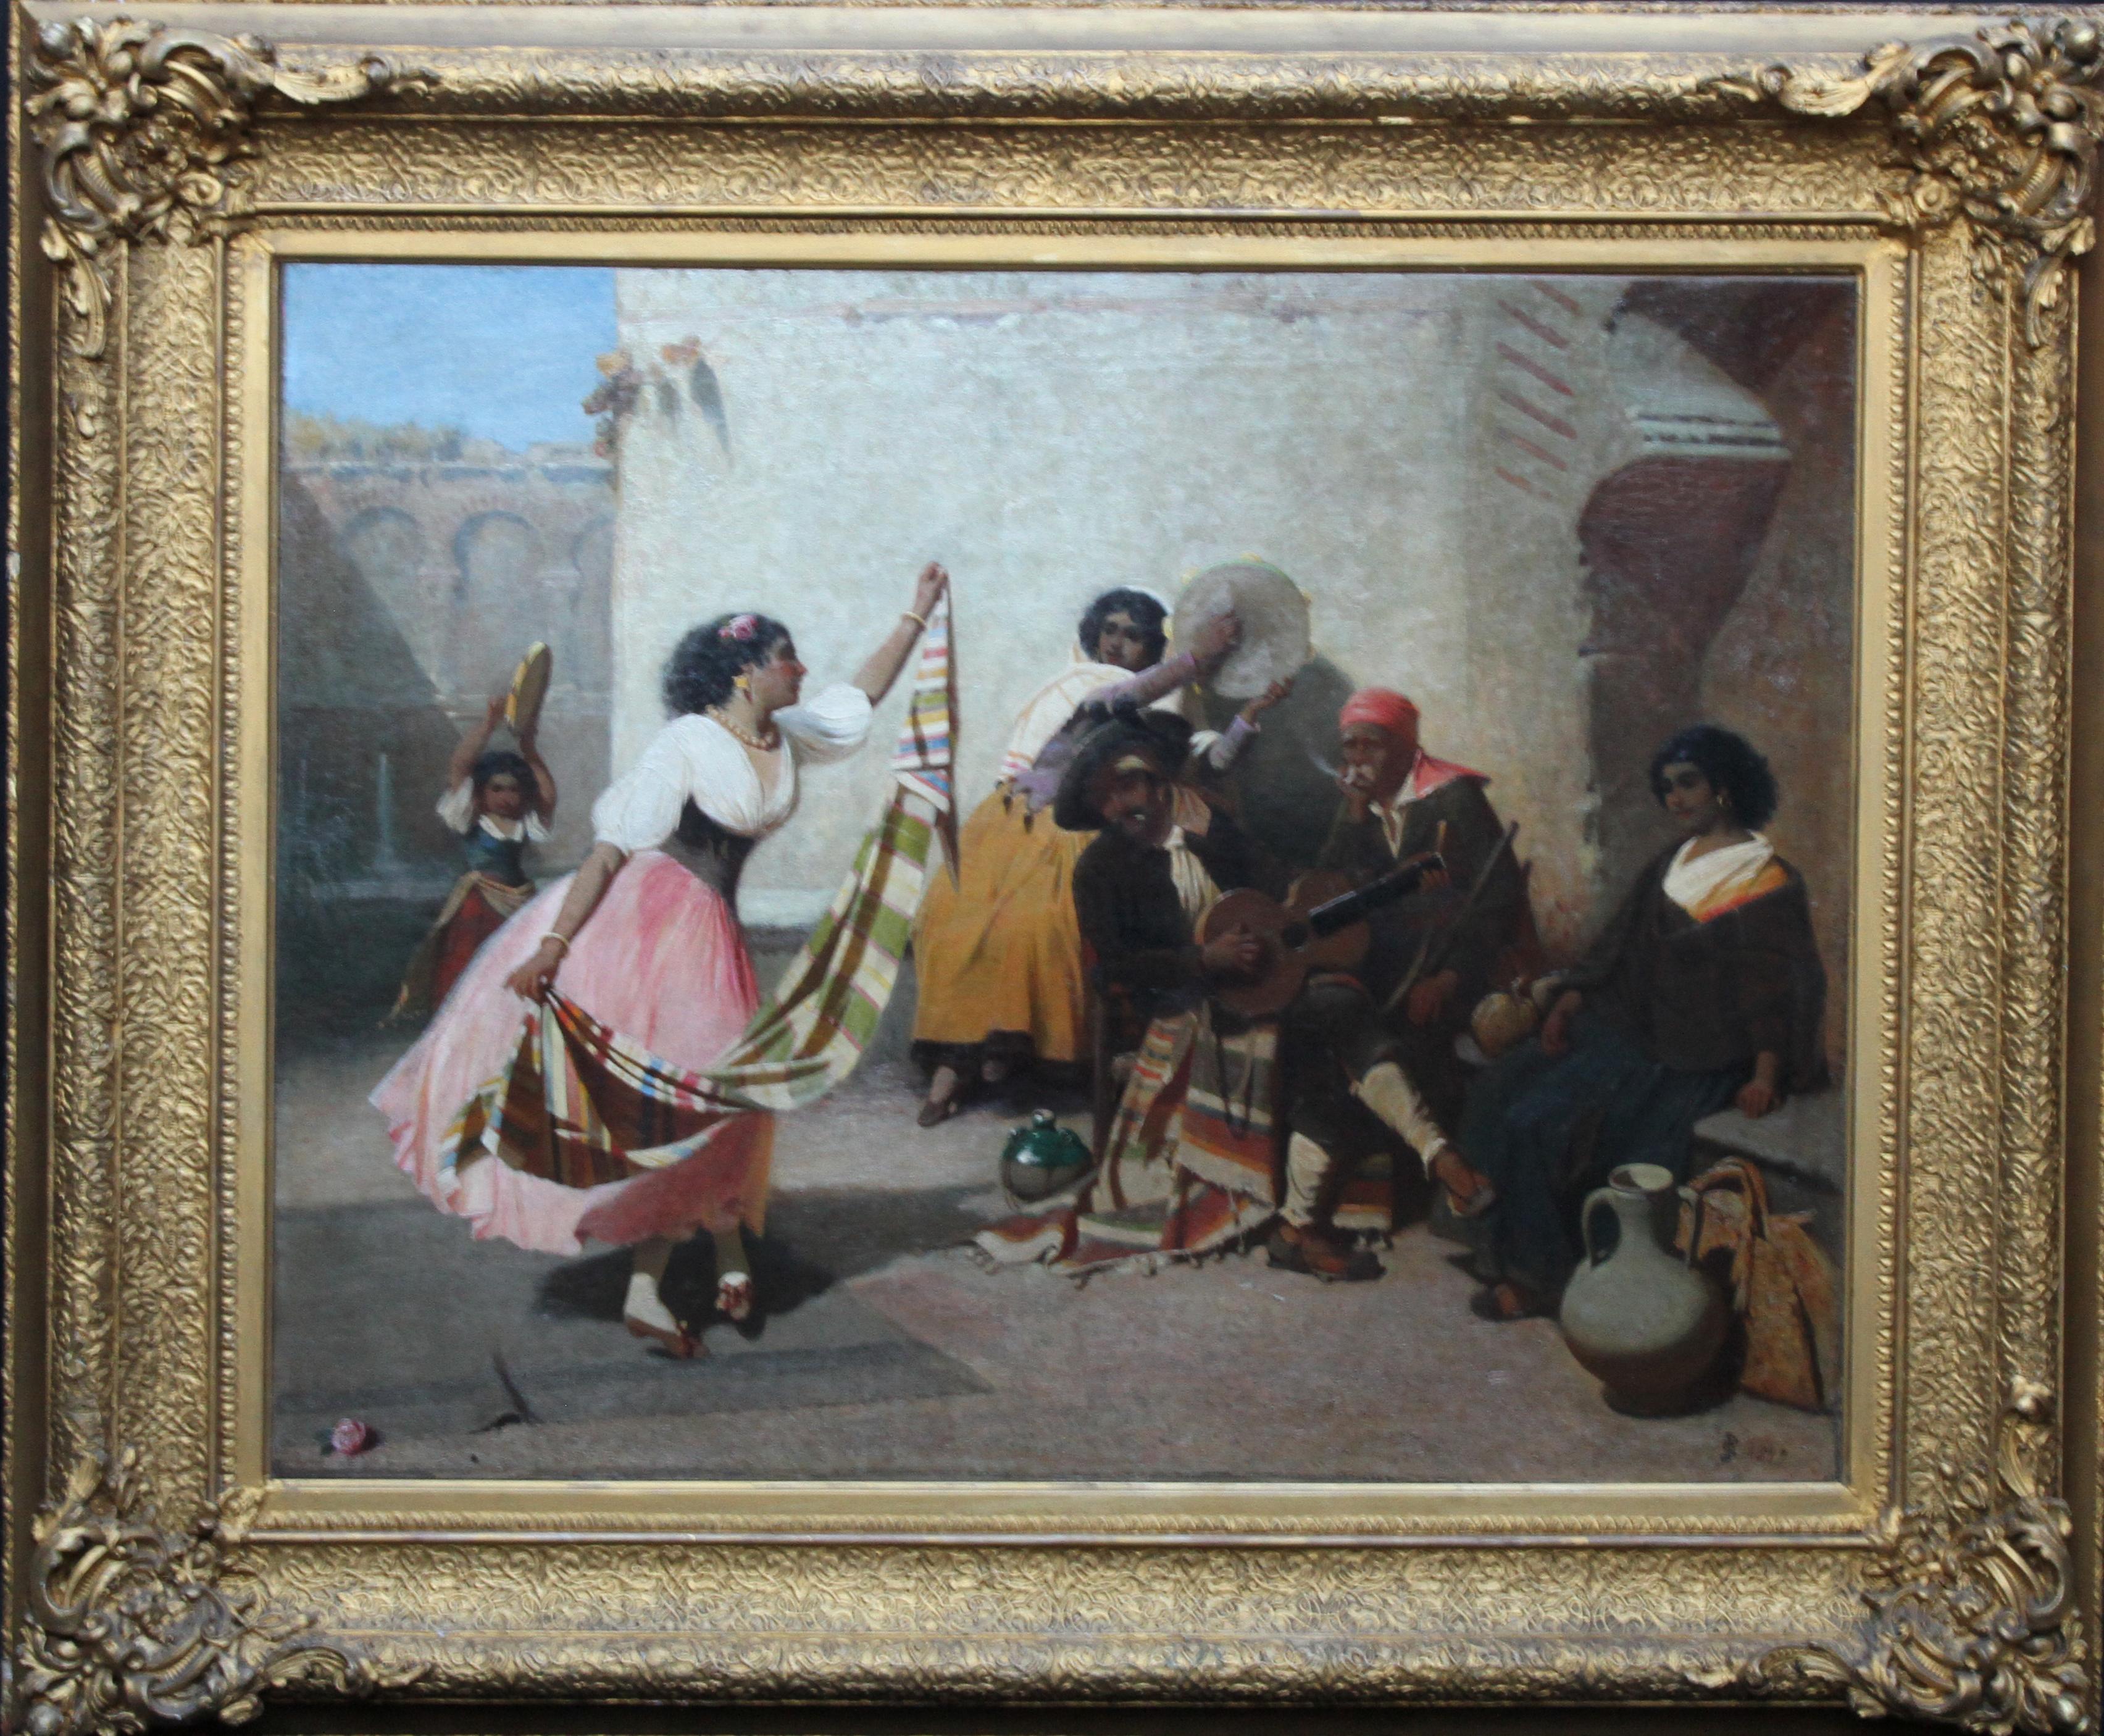 John Phillip Figurative Painting - Spanish Musicians with Dancing Girl- British Victorian art oil painting portrait